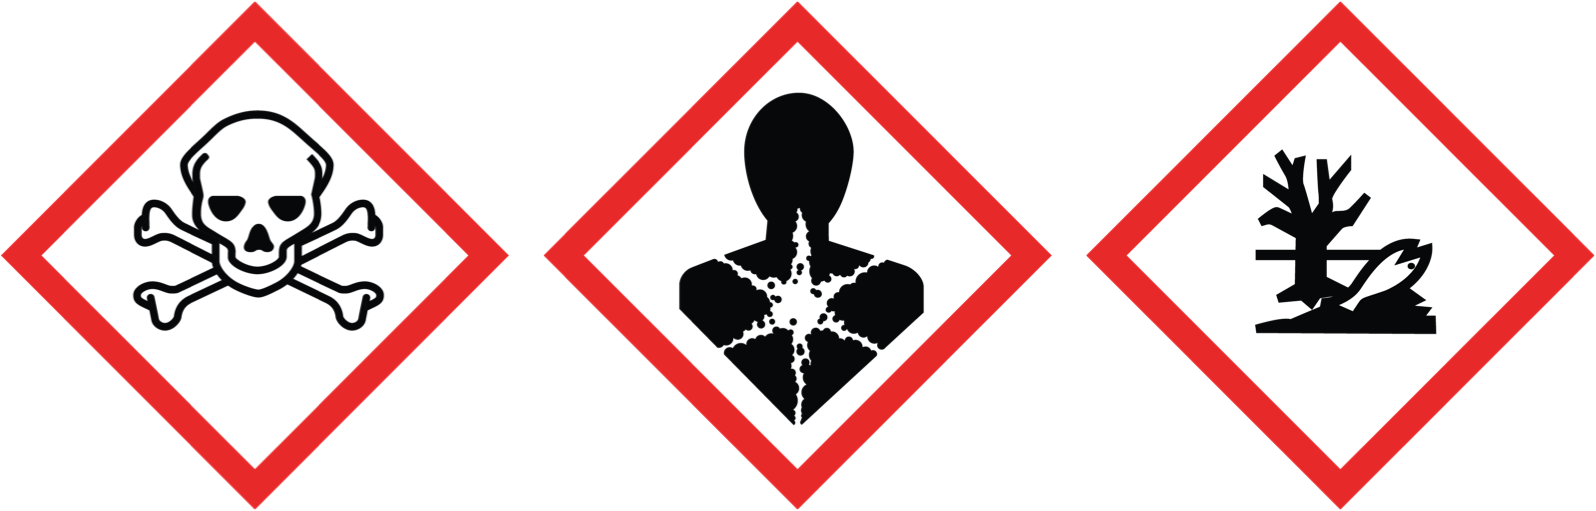 New chemical safety symbols 